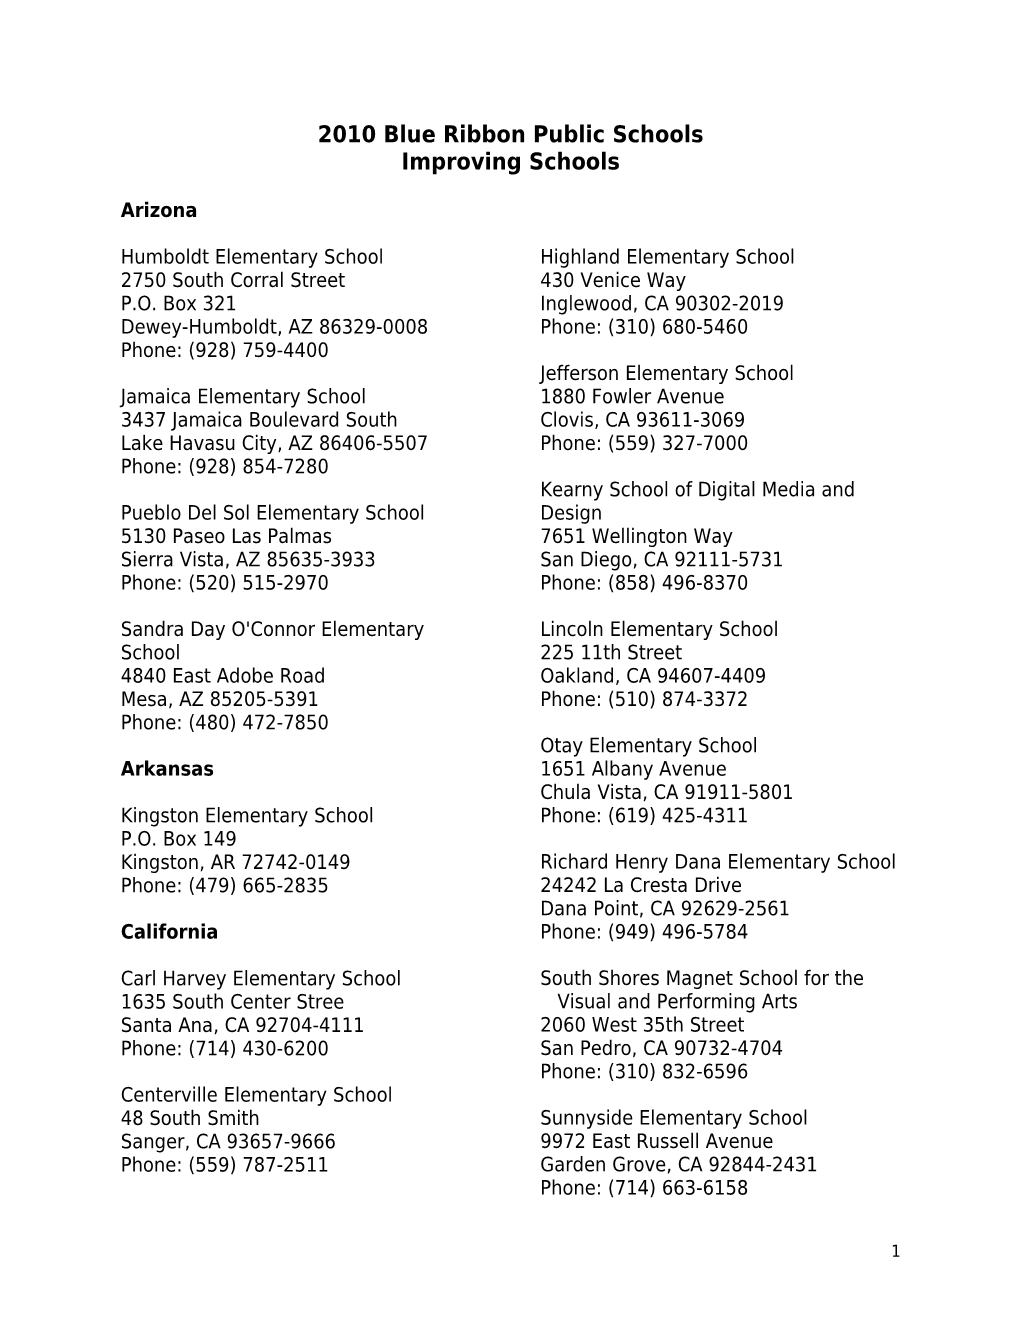 2010 Blue Ribbon Public Schools, Category: Improving Schools October 2010 (Msword)